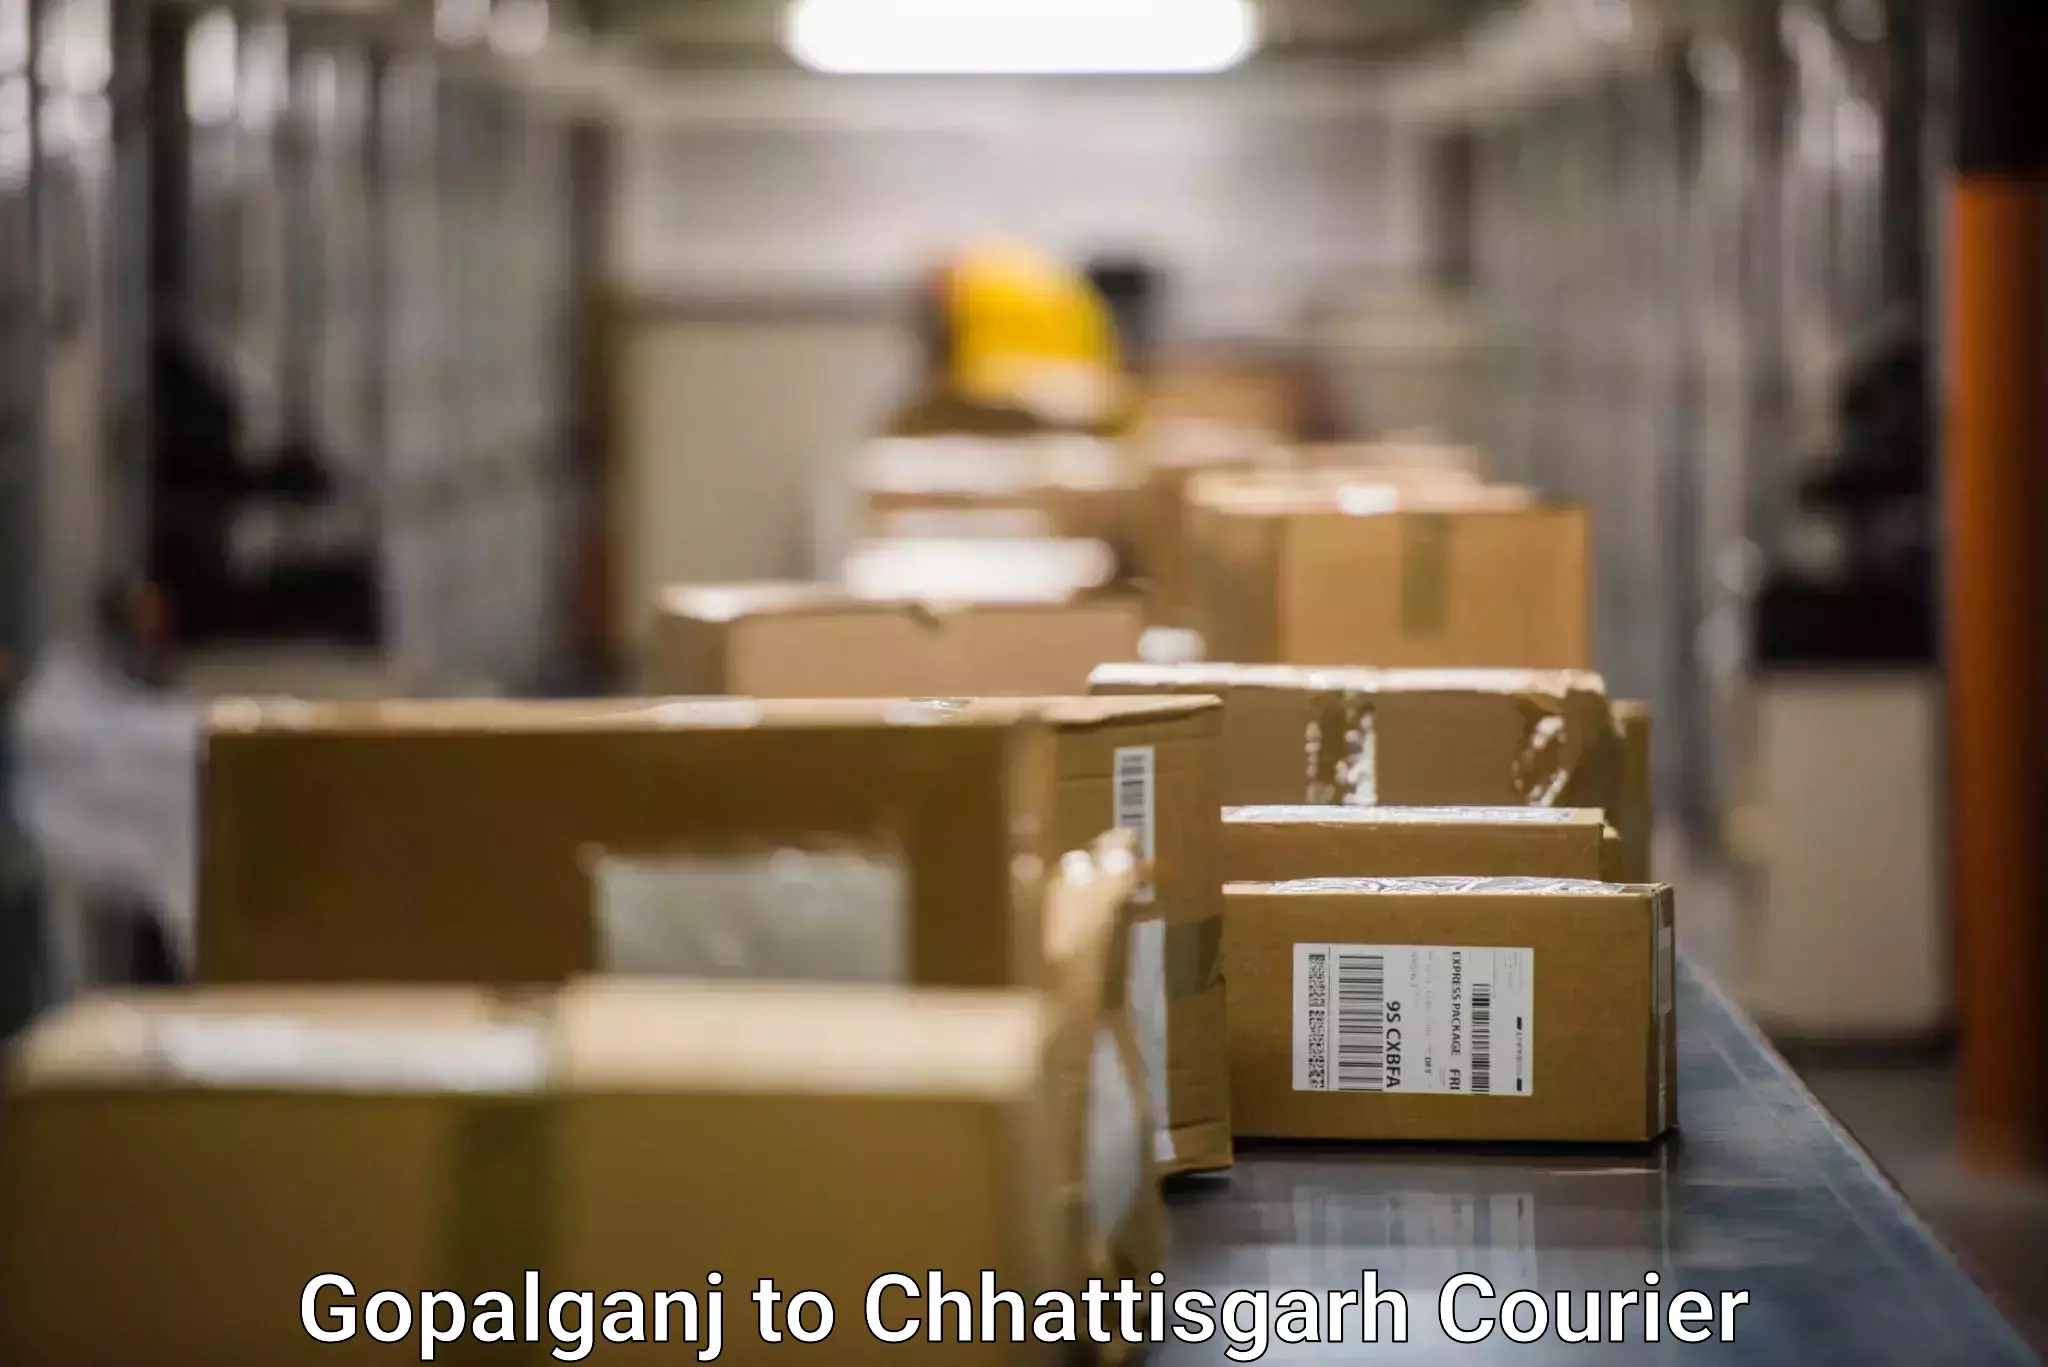 Business delivery service Gopalganj to Chhattisgarh